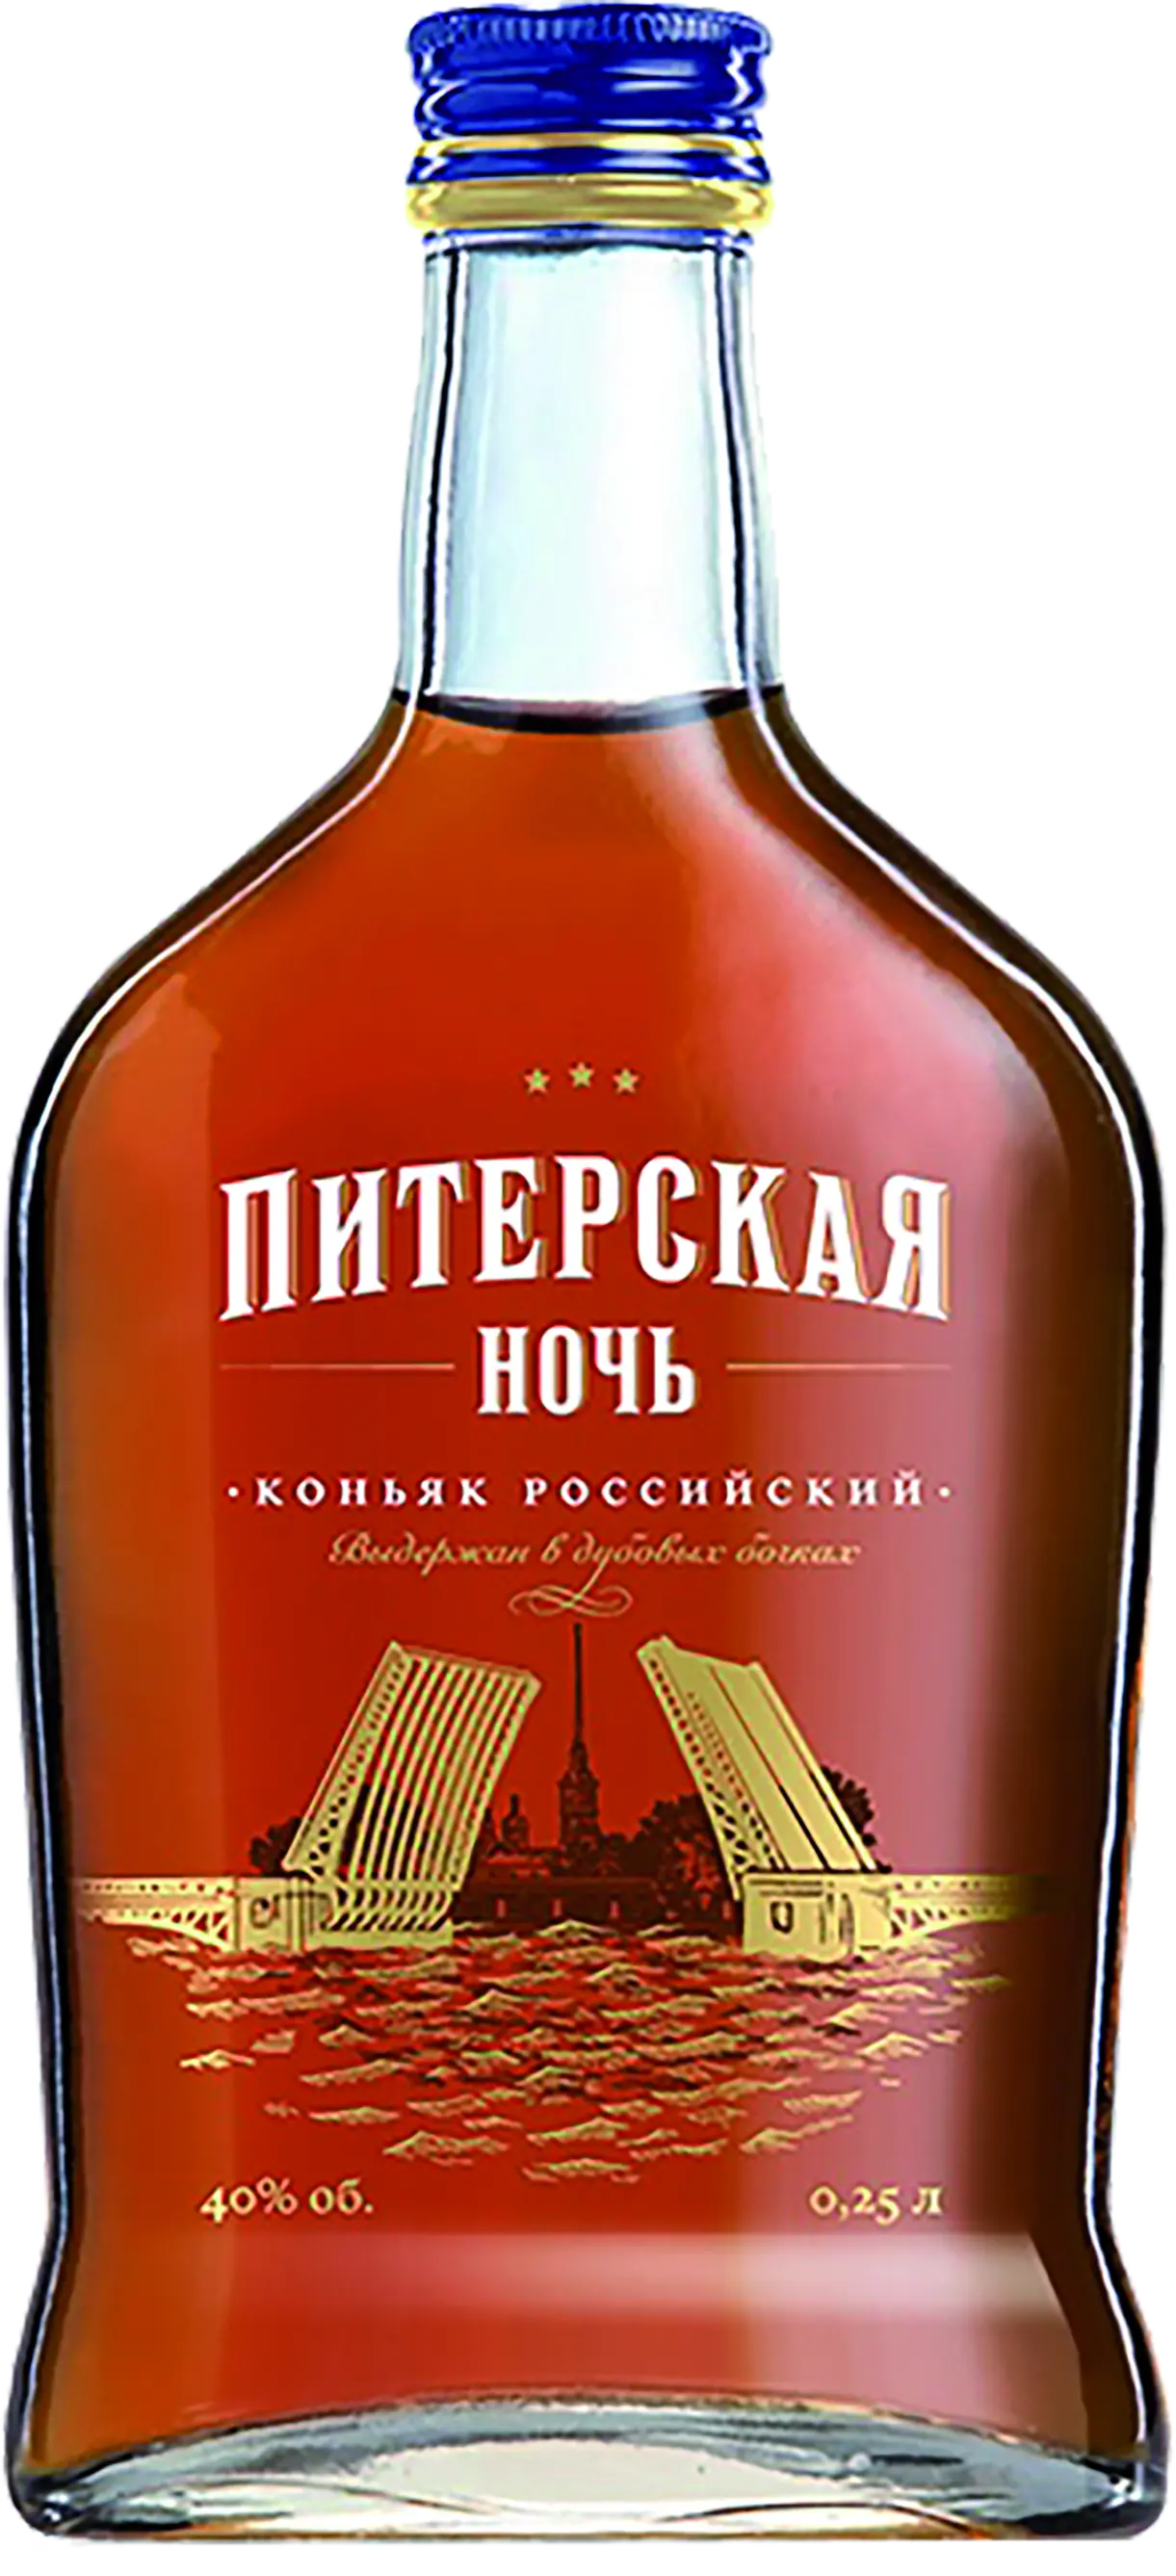 Питерская Ночь 3 года (Petersburg Night)